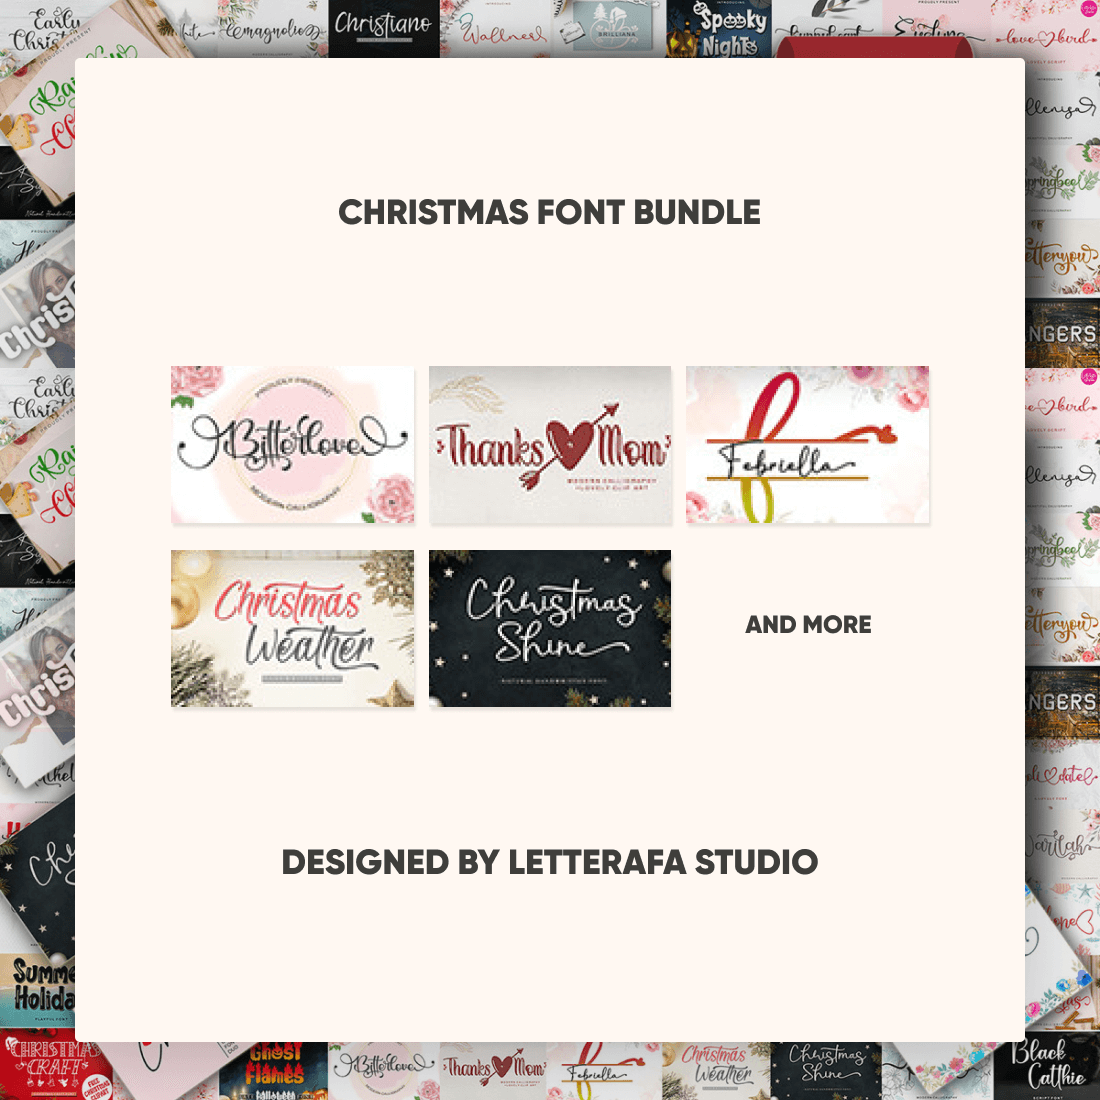 Christmas Font Bundle Designed by Letterafa Studio.